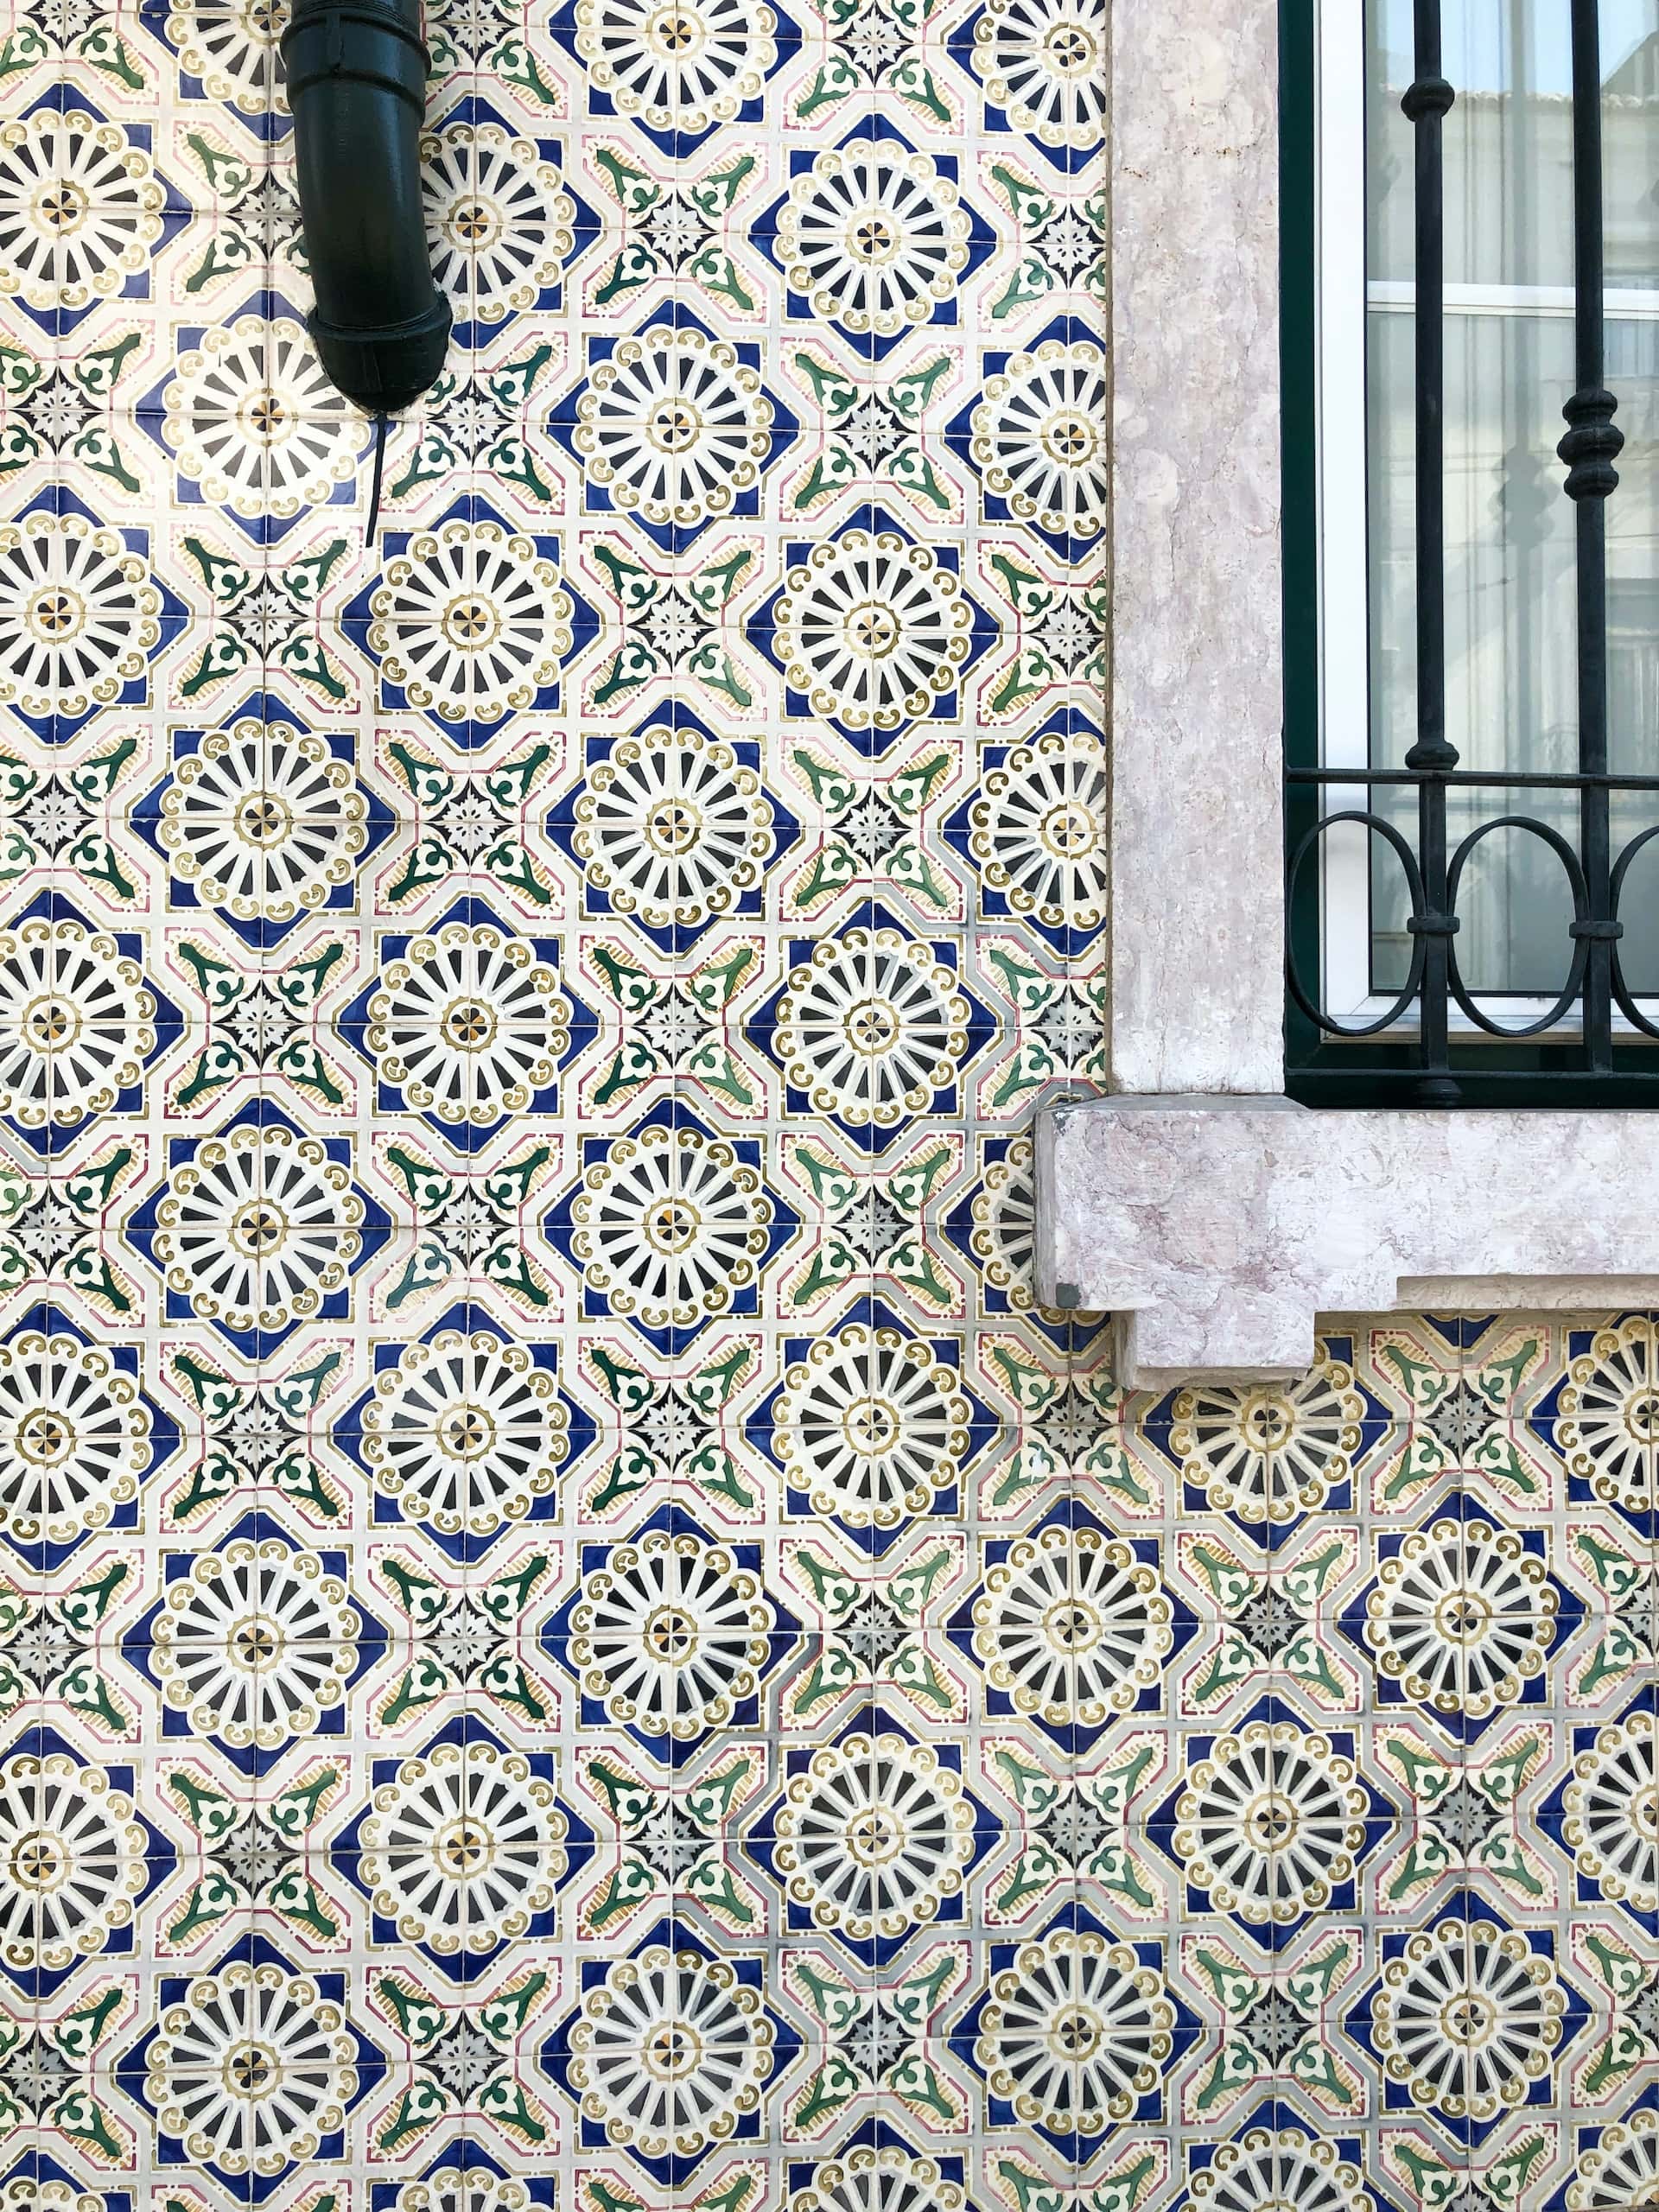 full-facade persian tiling